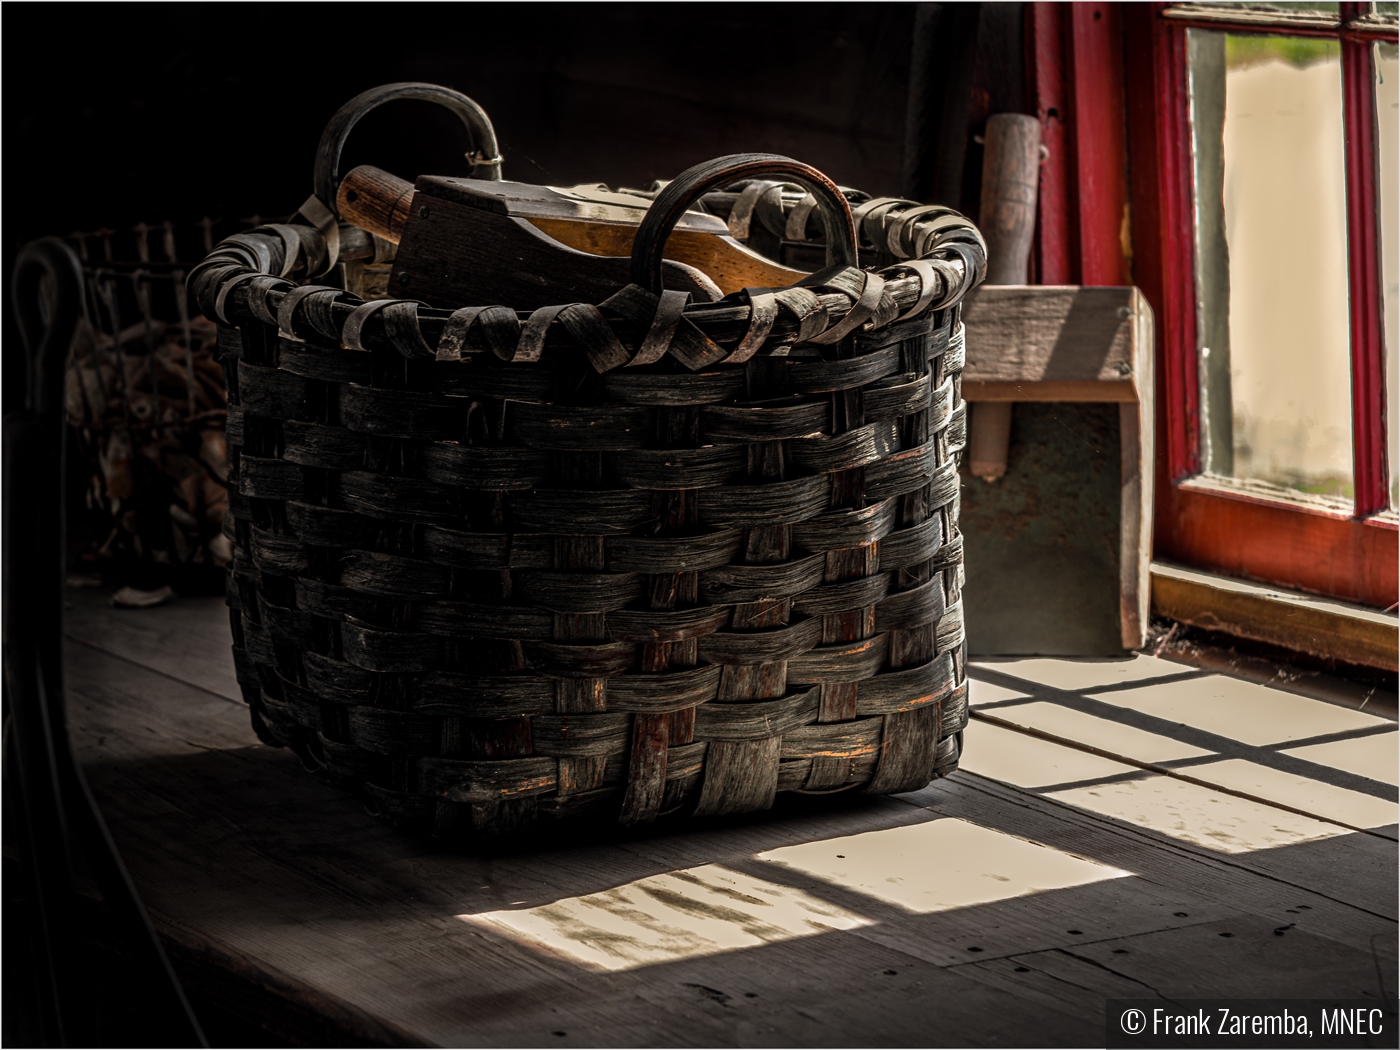 The Basket by Frank Zaremba, MNEC